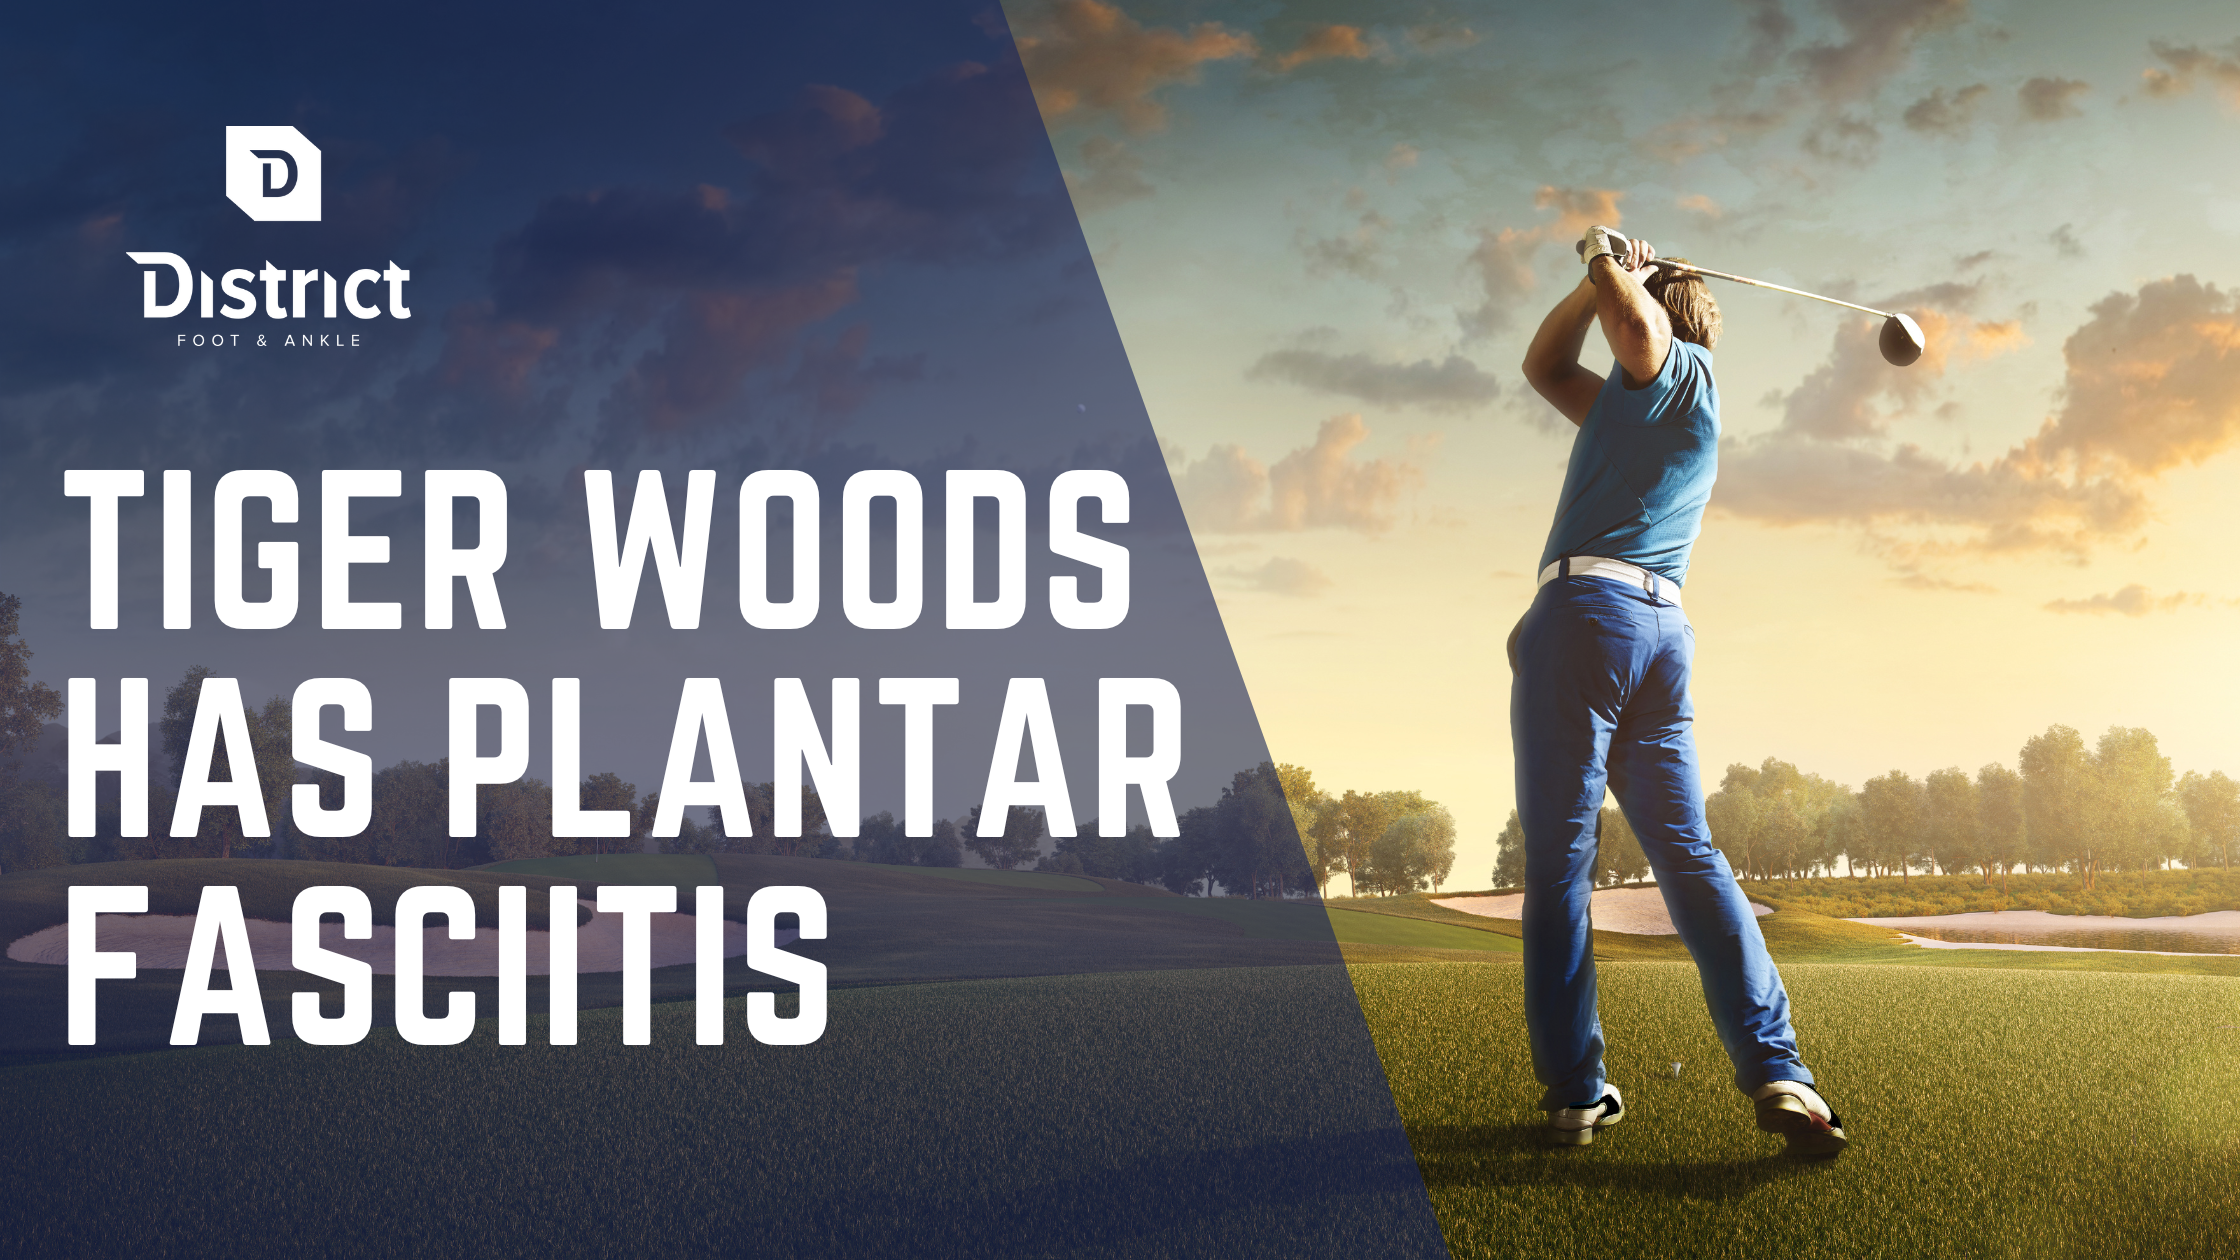 Tiger Woods has plantar fasciitis